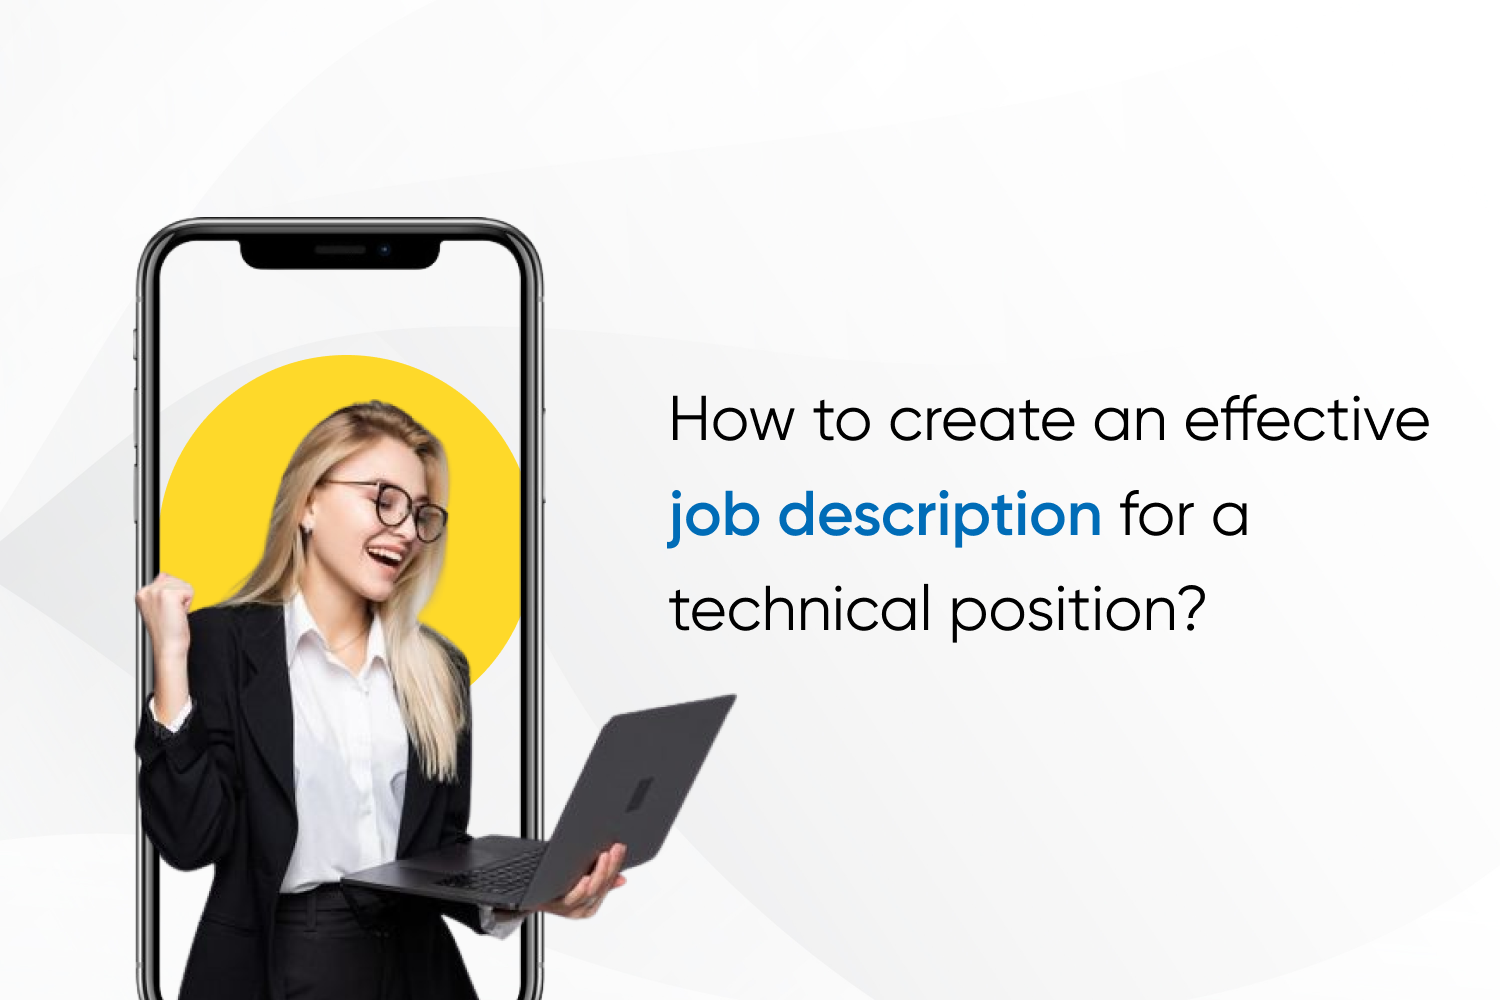 How to create an effective job description for a technical position